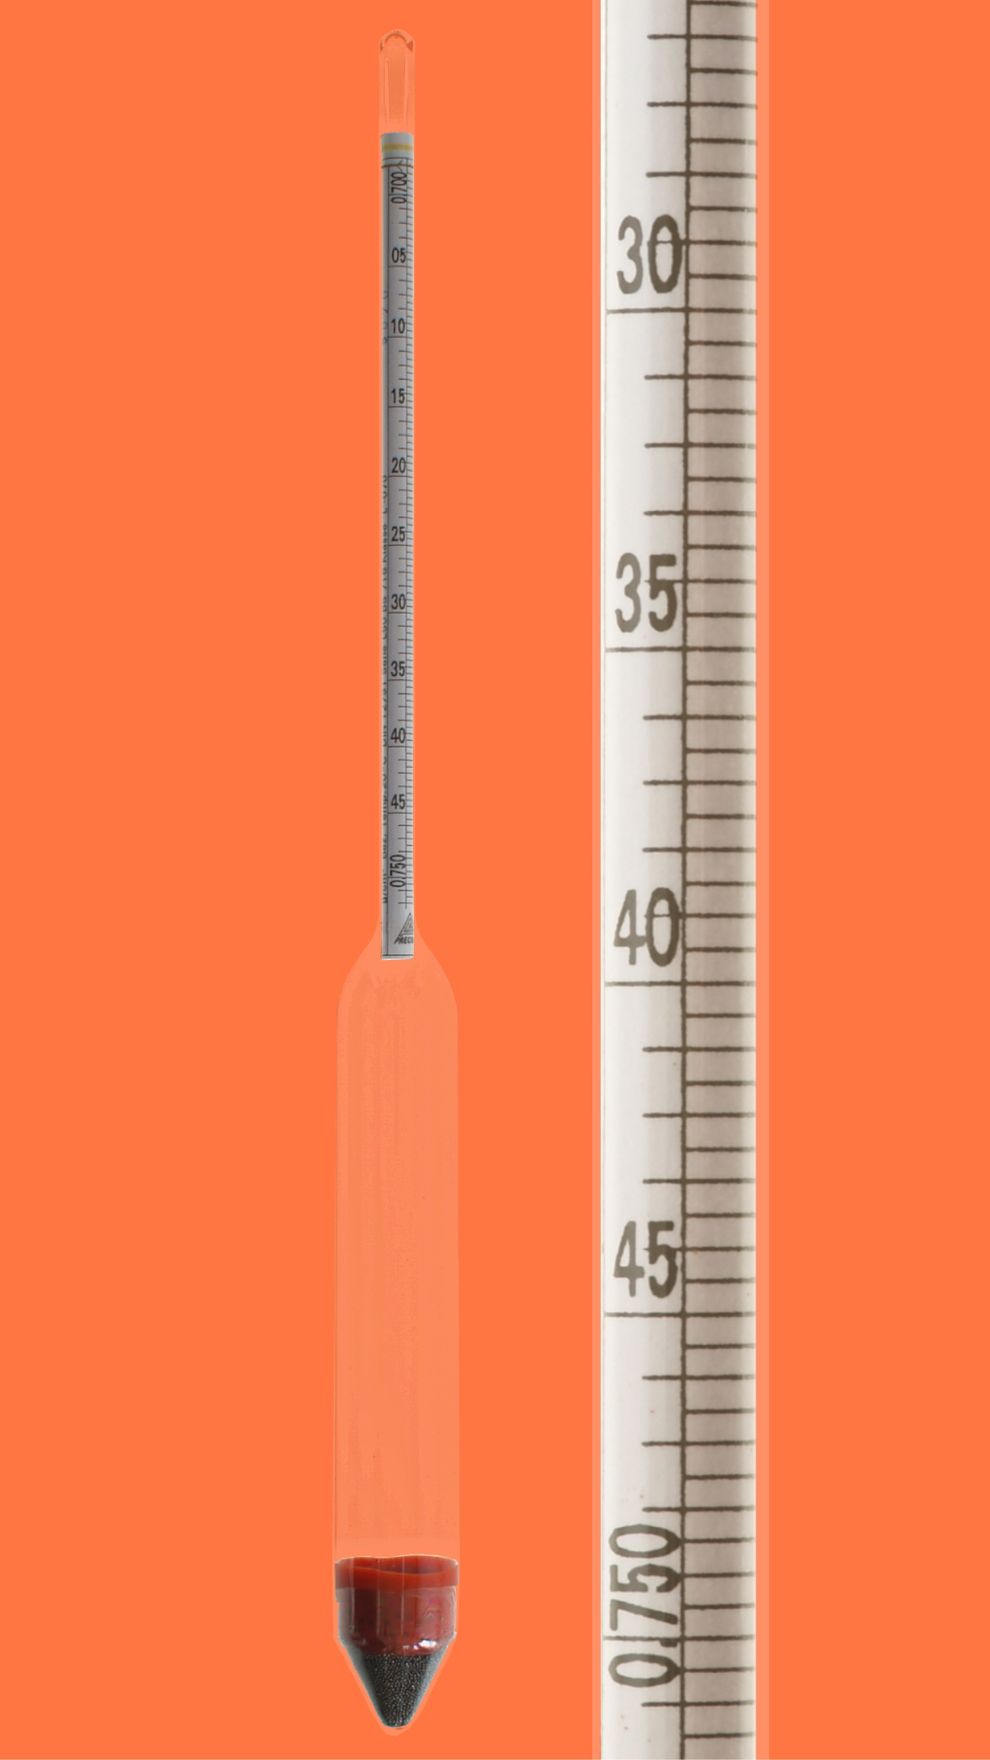 Aräometer, DIN 12791, L50, 0,80-0,85:0,0005g/cm³, Bezugstemp. 20°C, ohne Thermometer